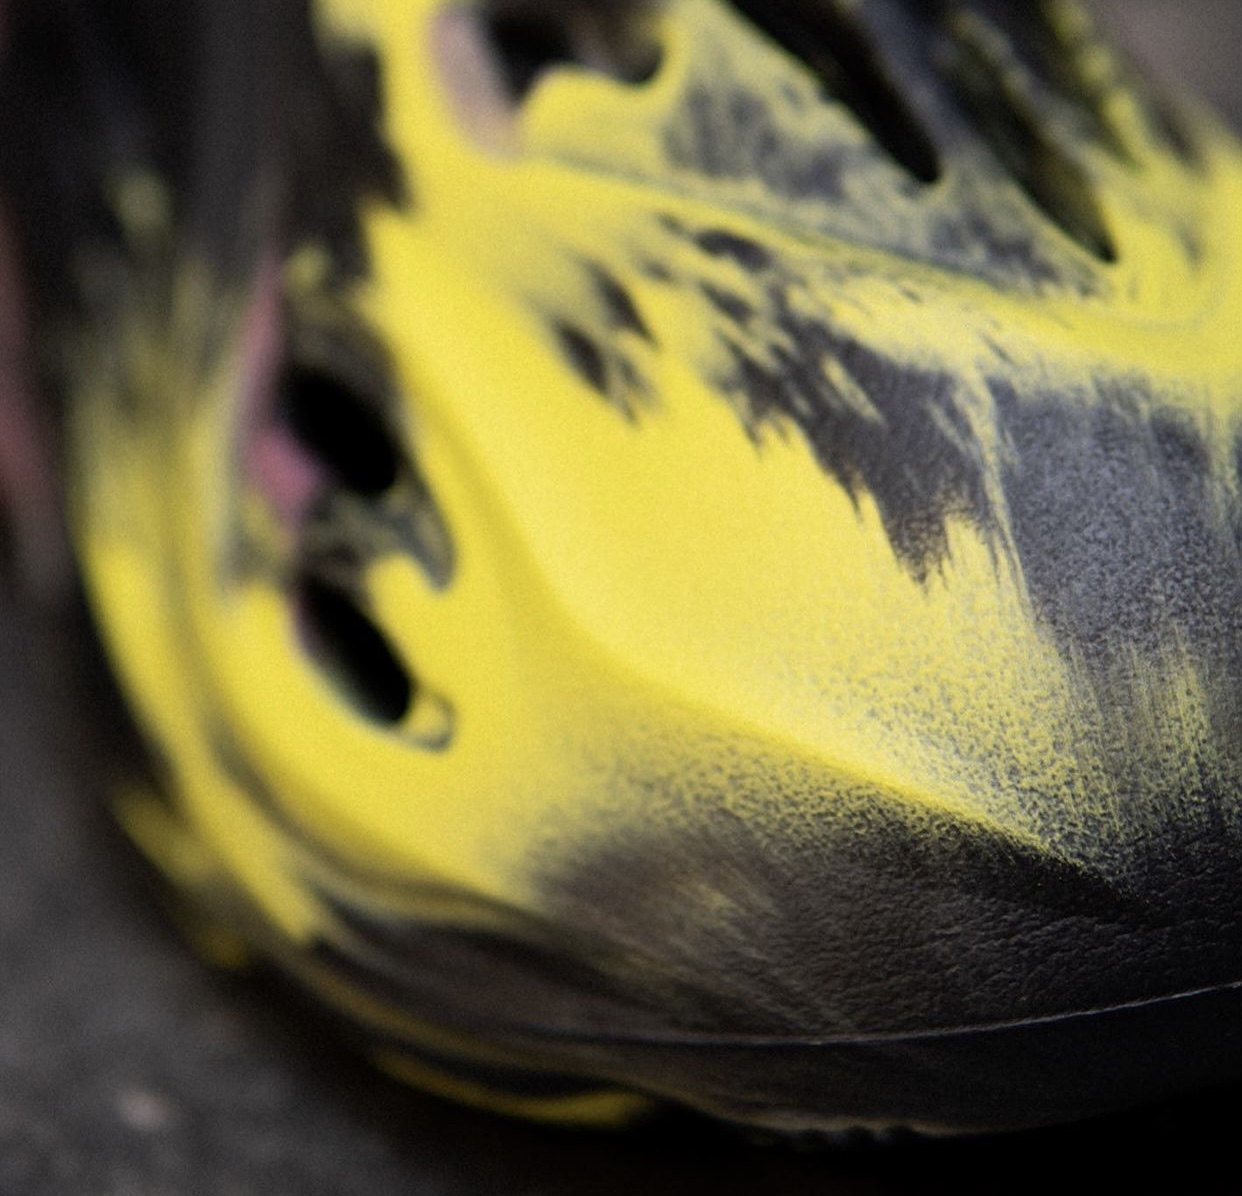 adidas Yeezy Foam Runner MX Carbon Release Date Price 2